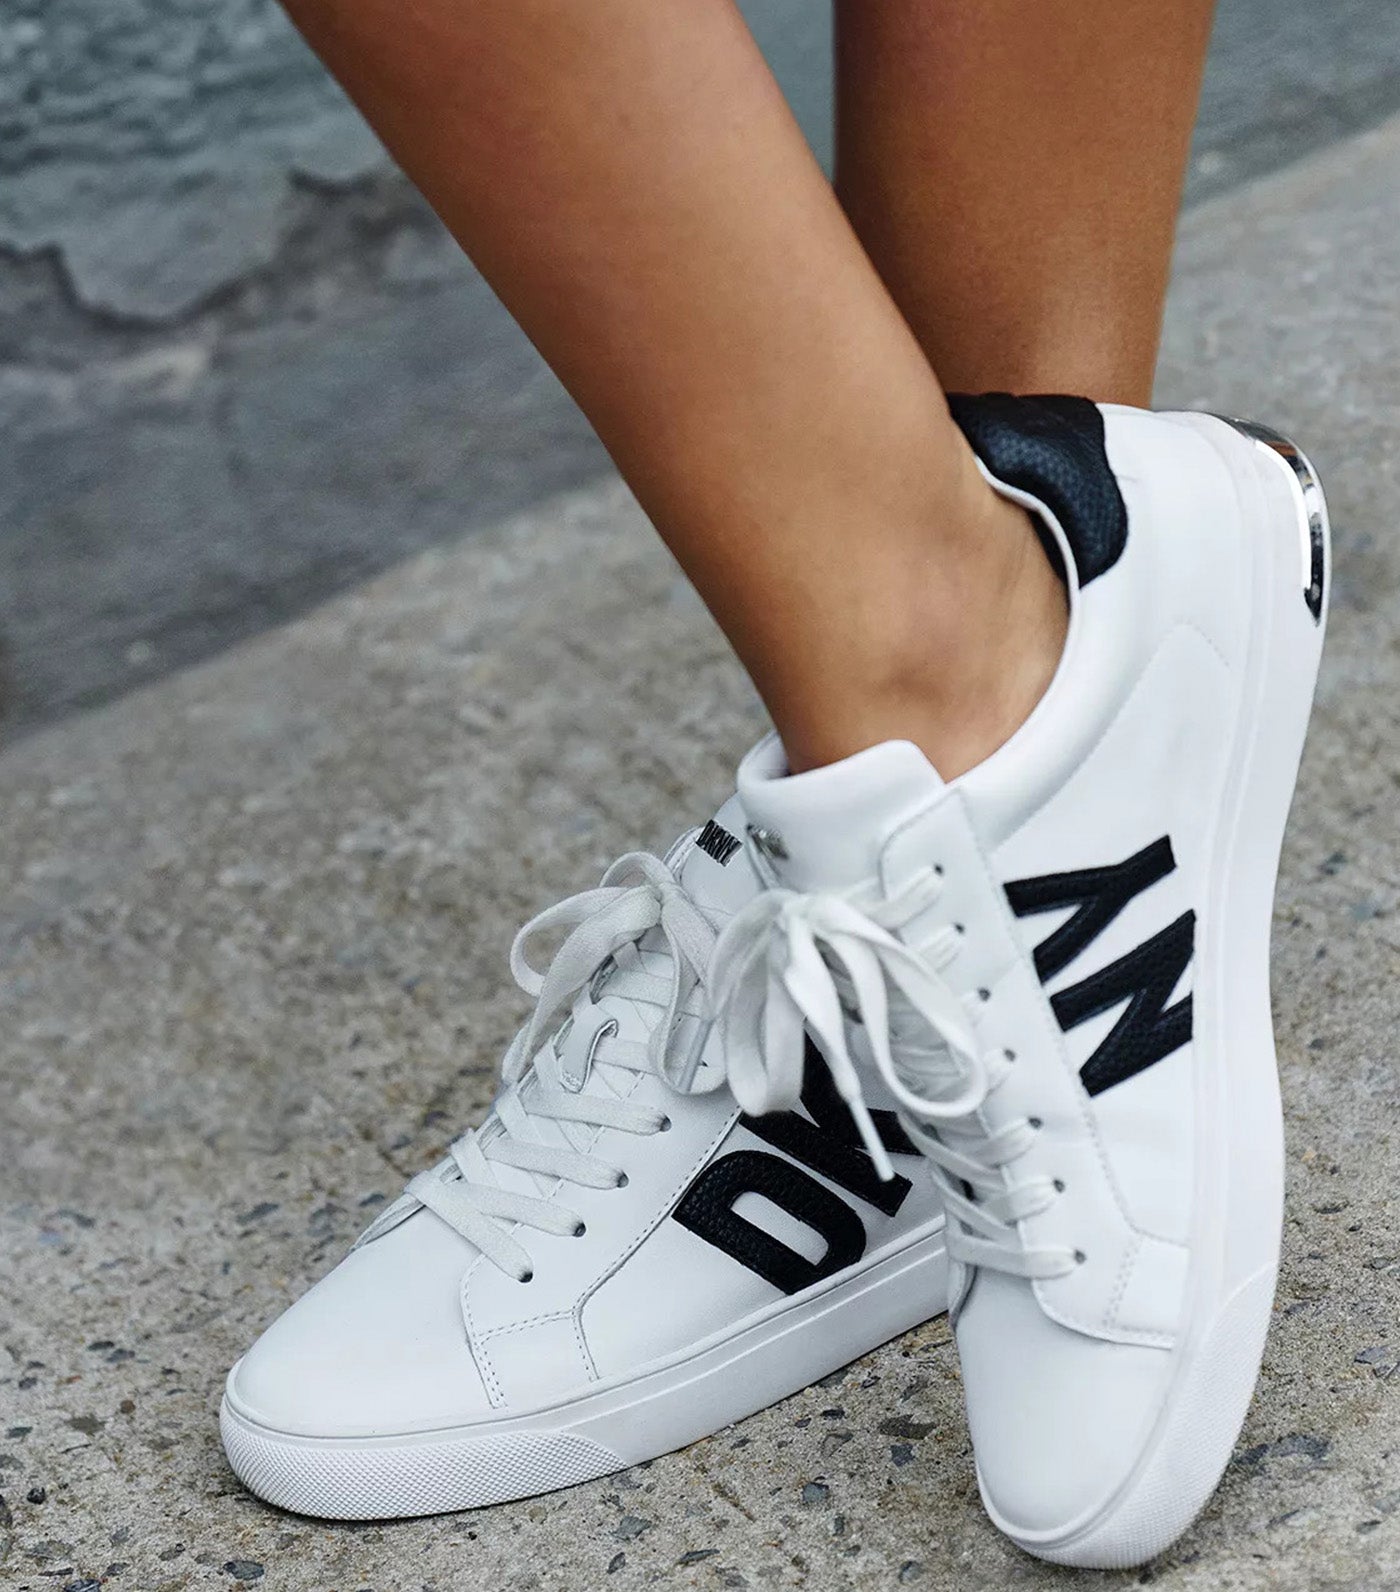 Abeni Lace Up Sneaker Bright White/Black